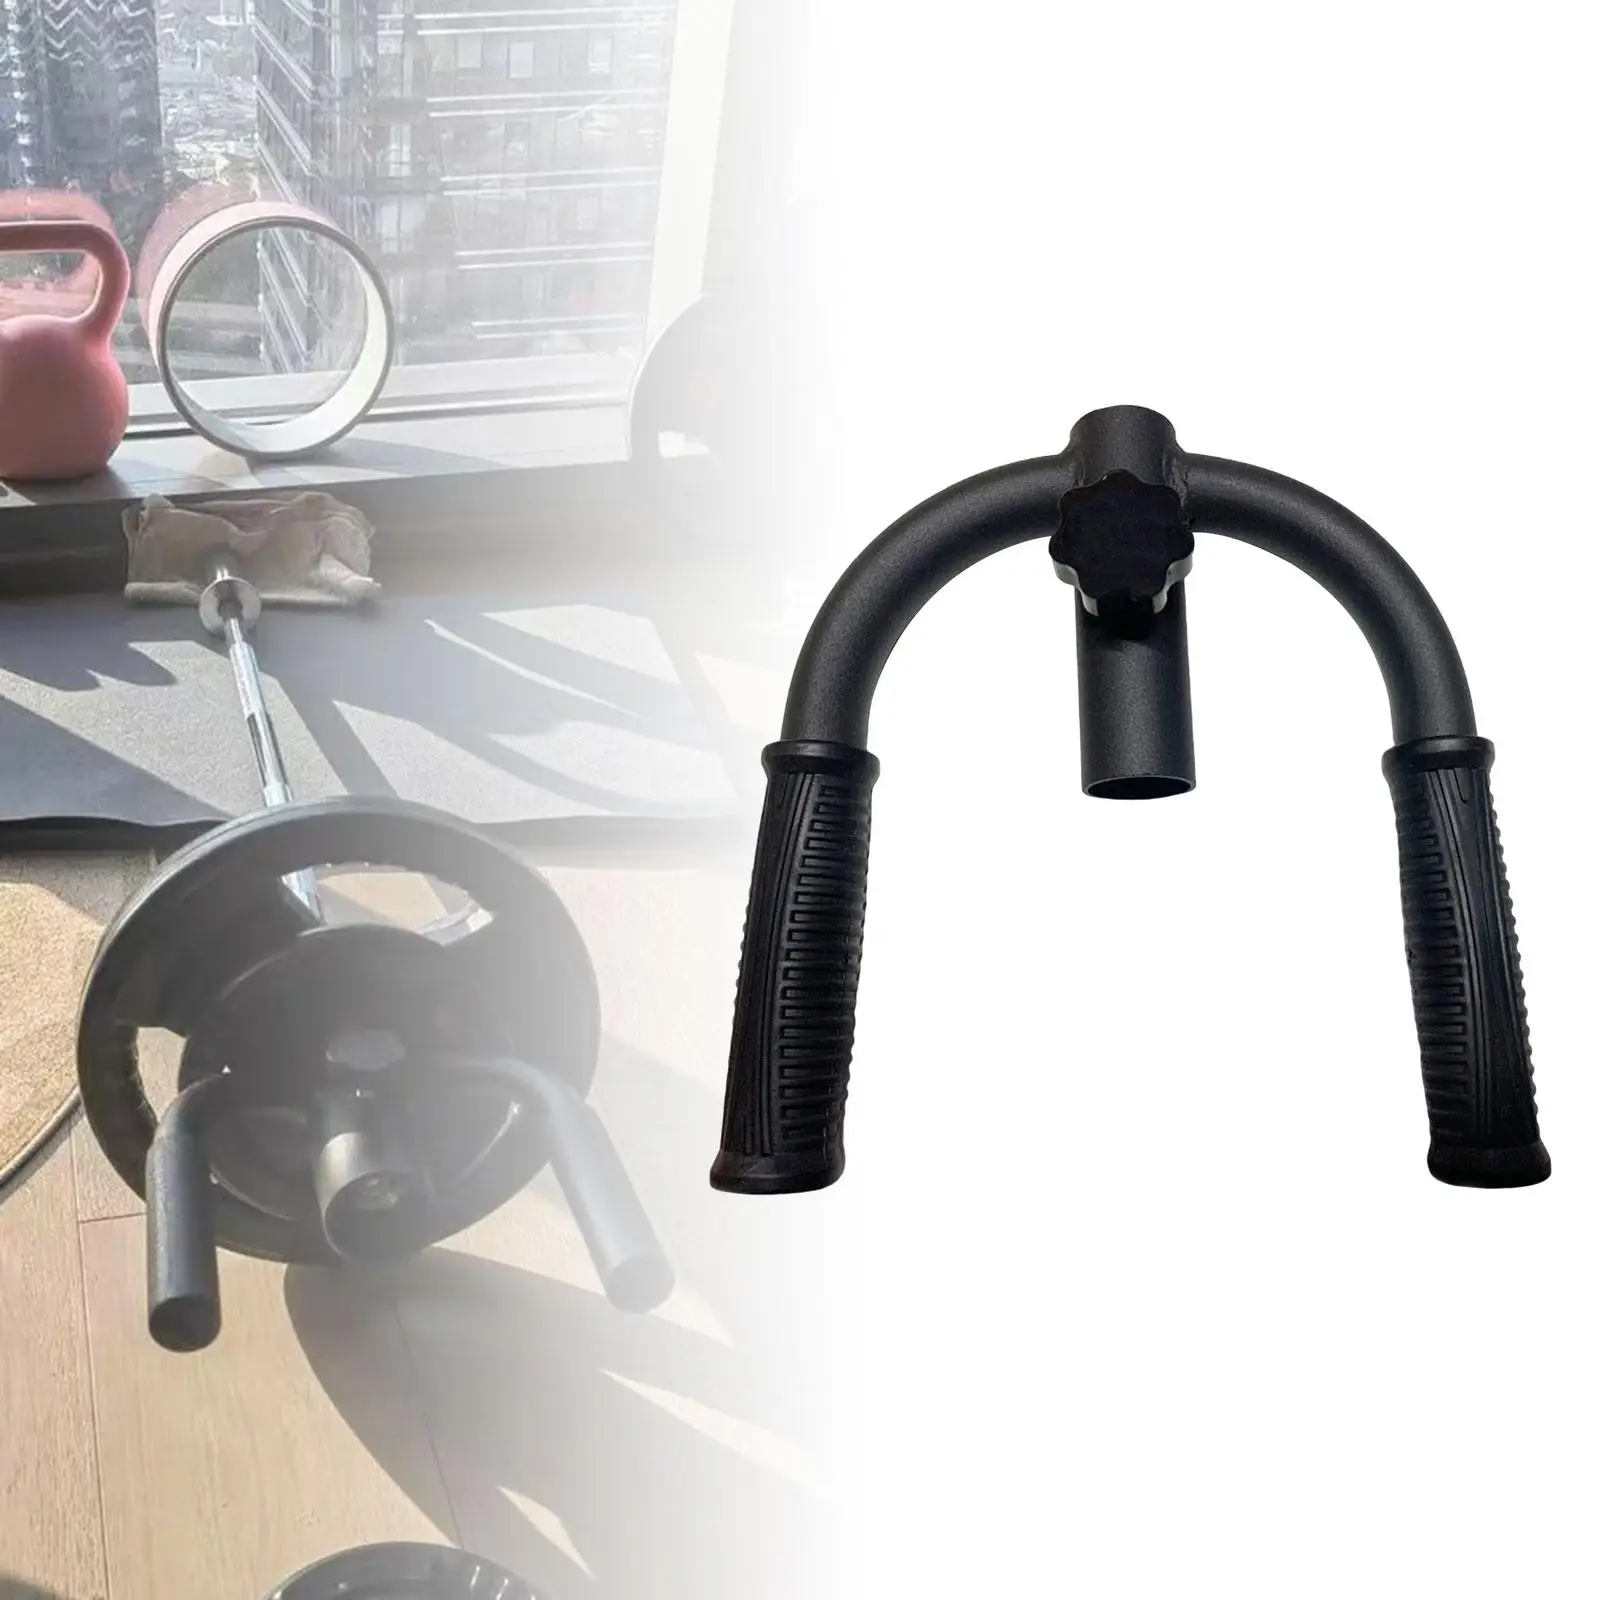 T Bar Row Attachment Equipment Fitness 28mm Hole Diameter Hand Grip for Weight